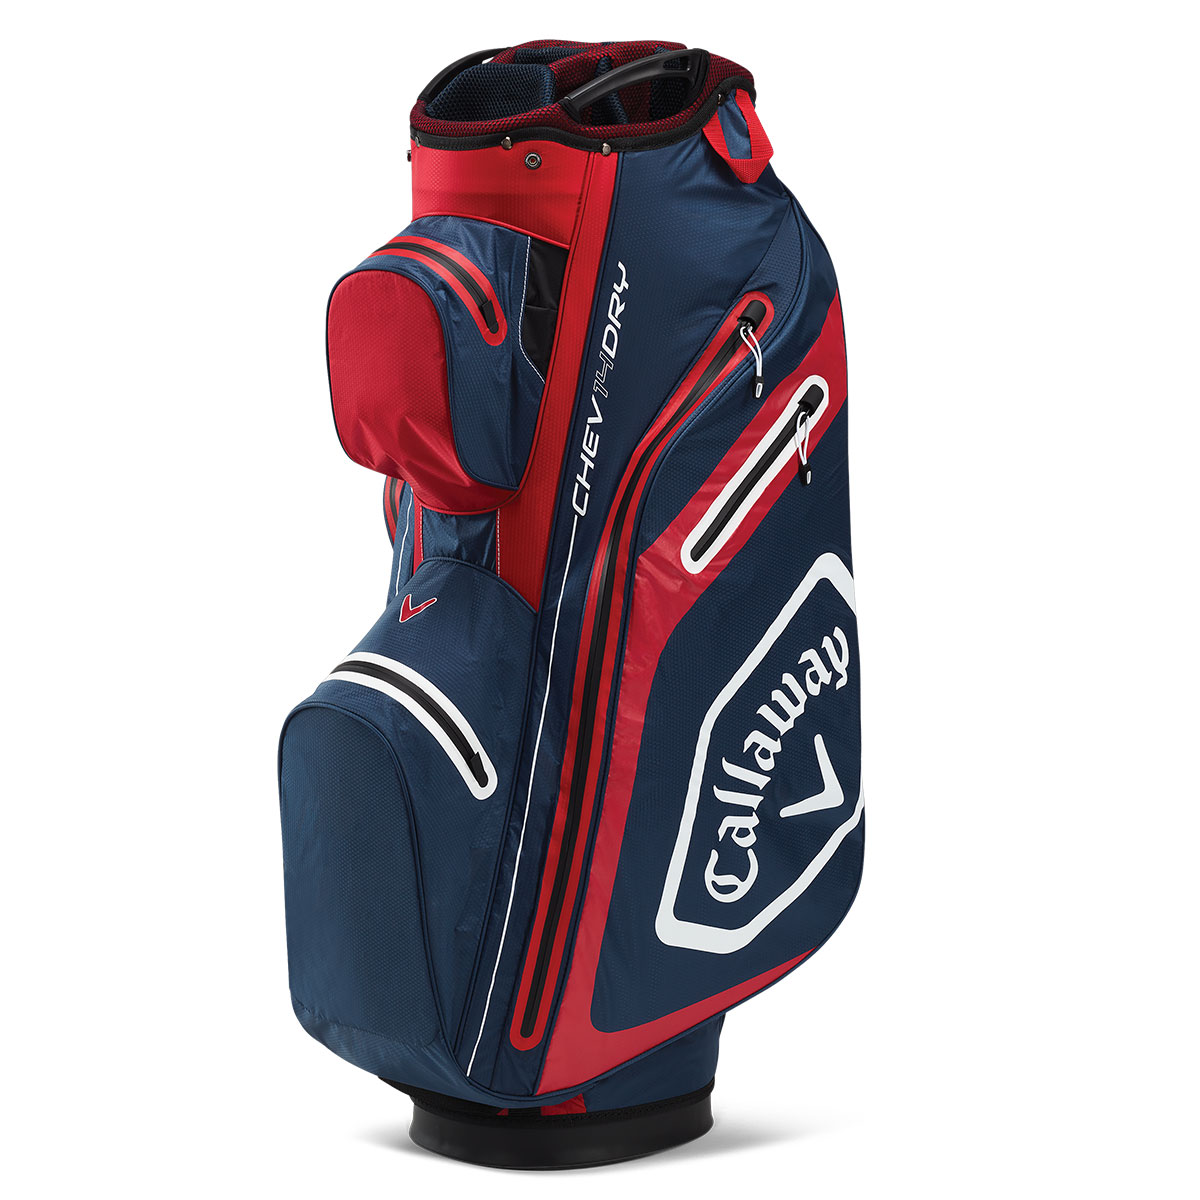 Callaway Golf Chev Dry 14 Cart Bag from american golf